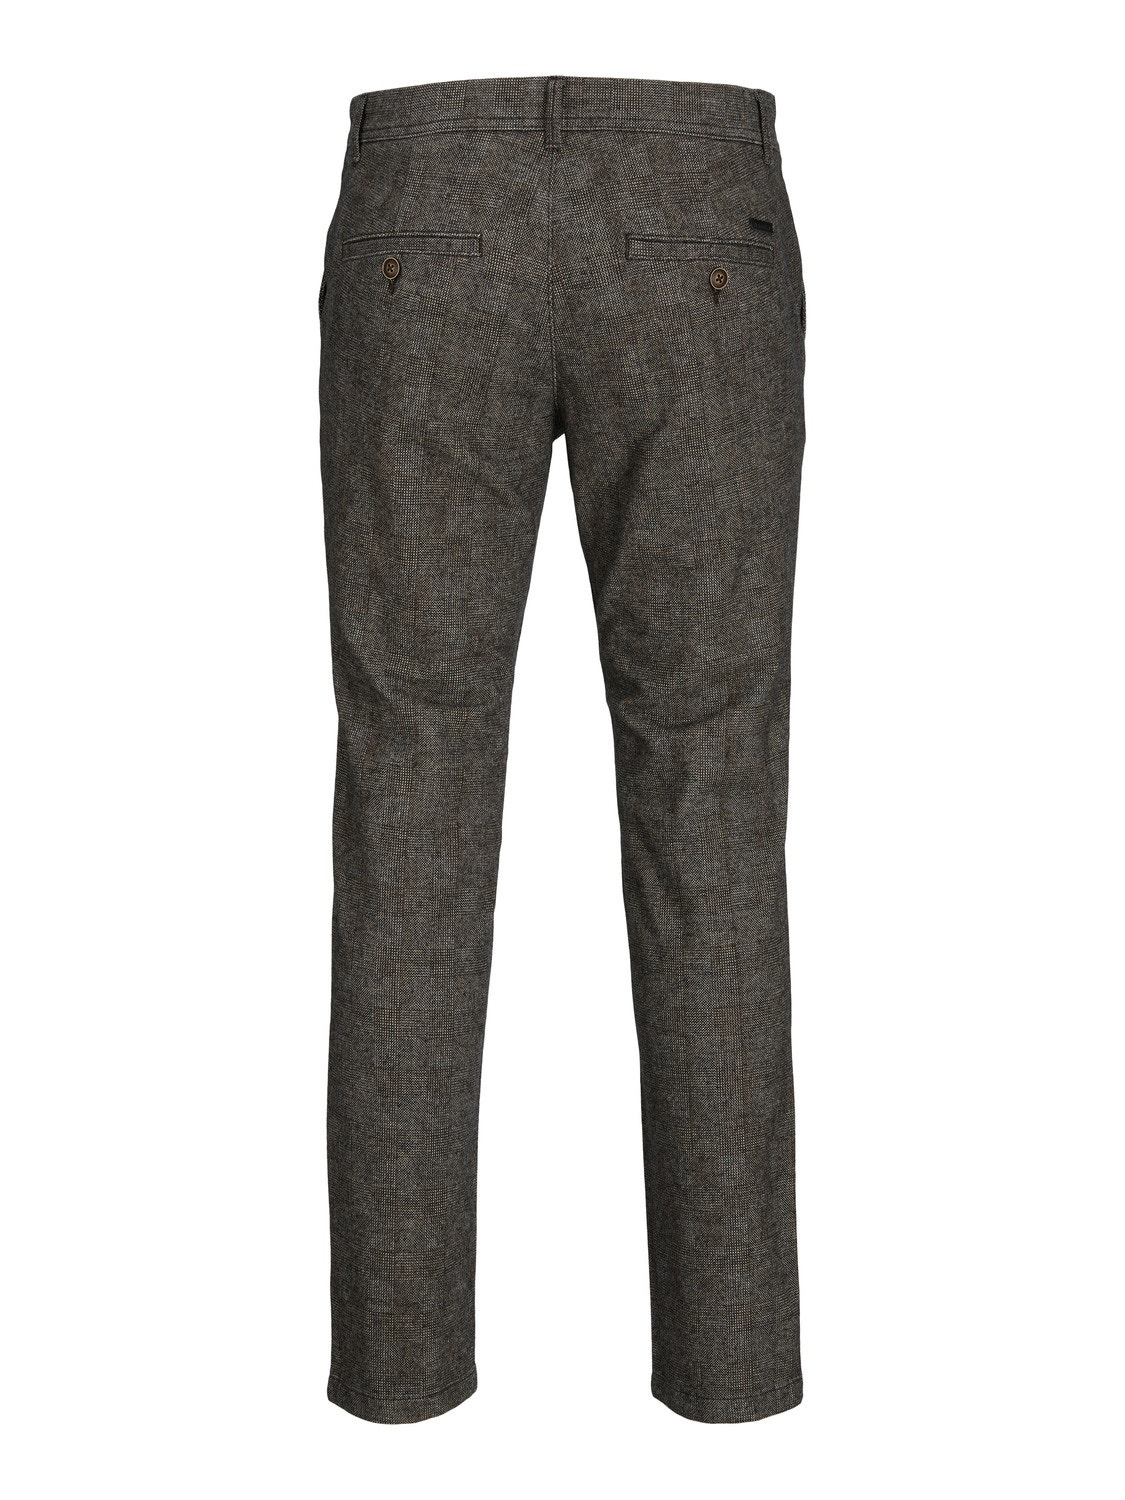 Jack & Jones Slim Fit Chino trousers -Chocolate Brown - 12250185